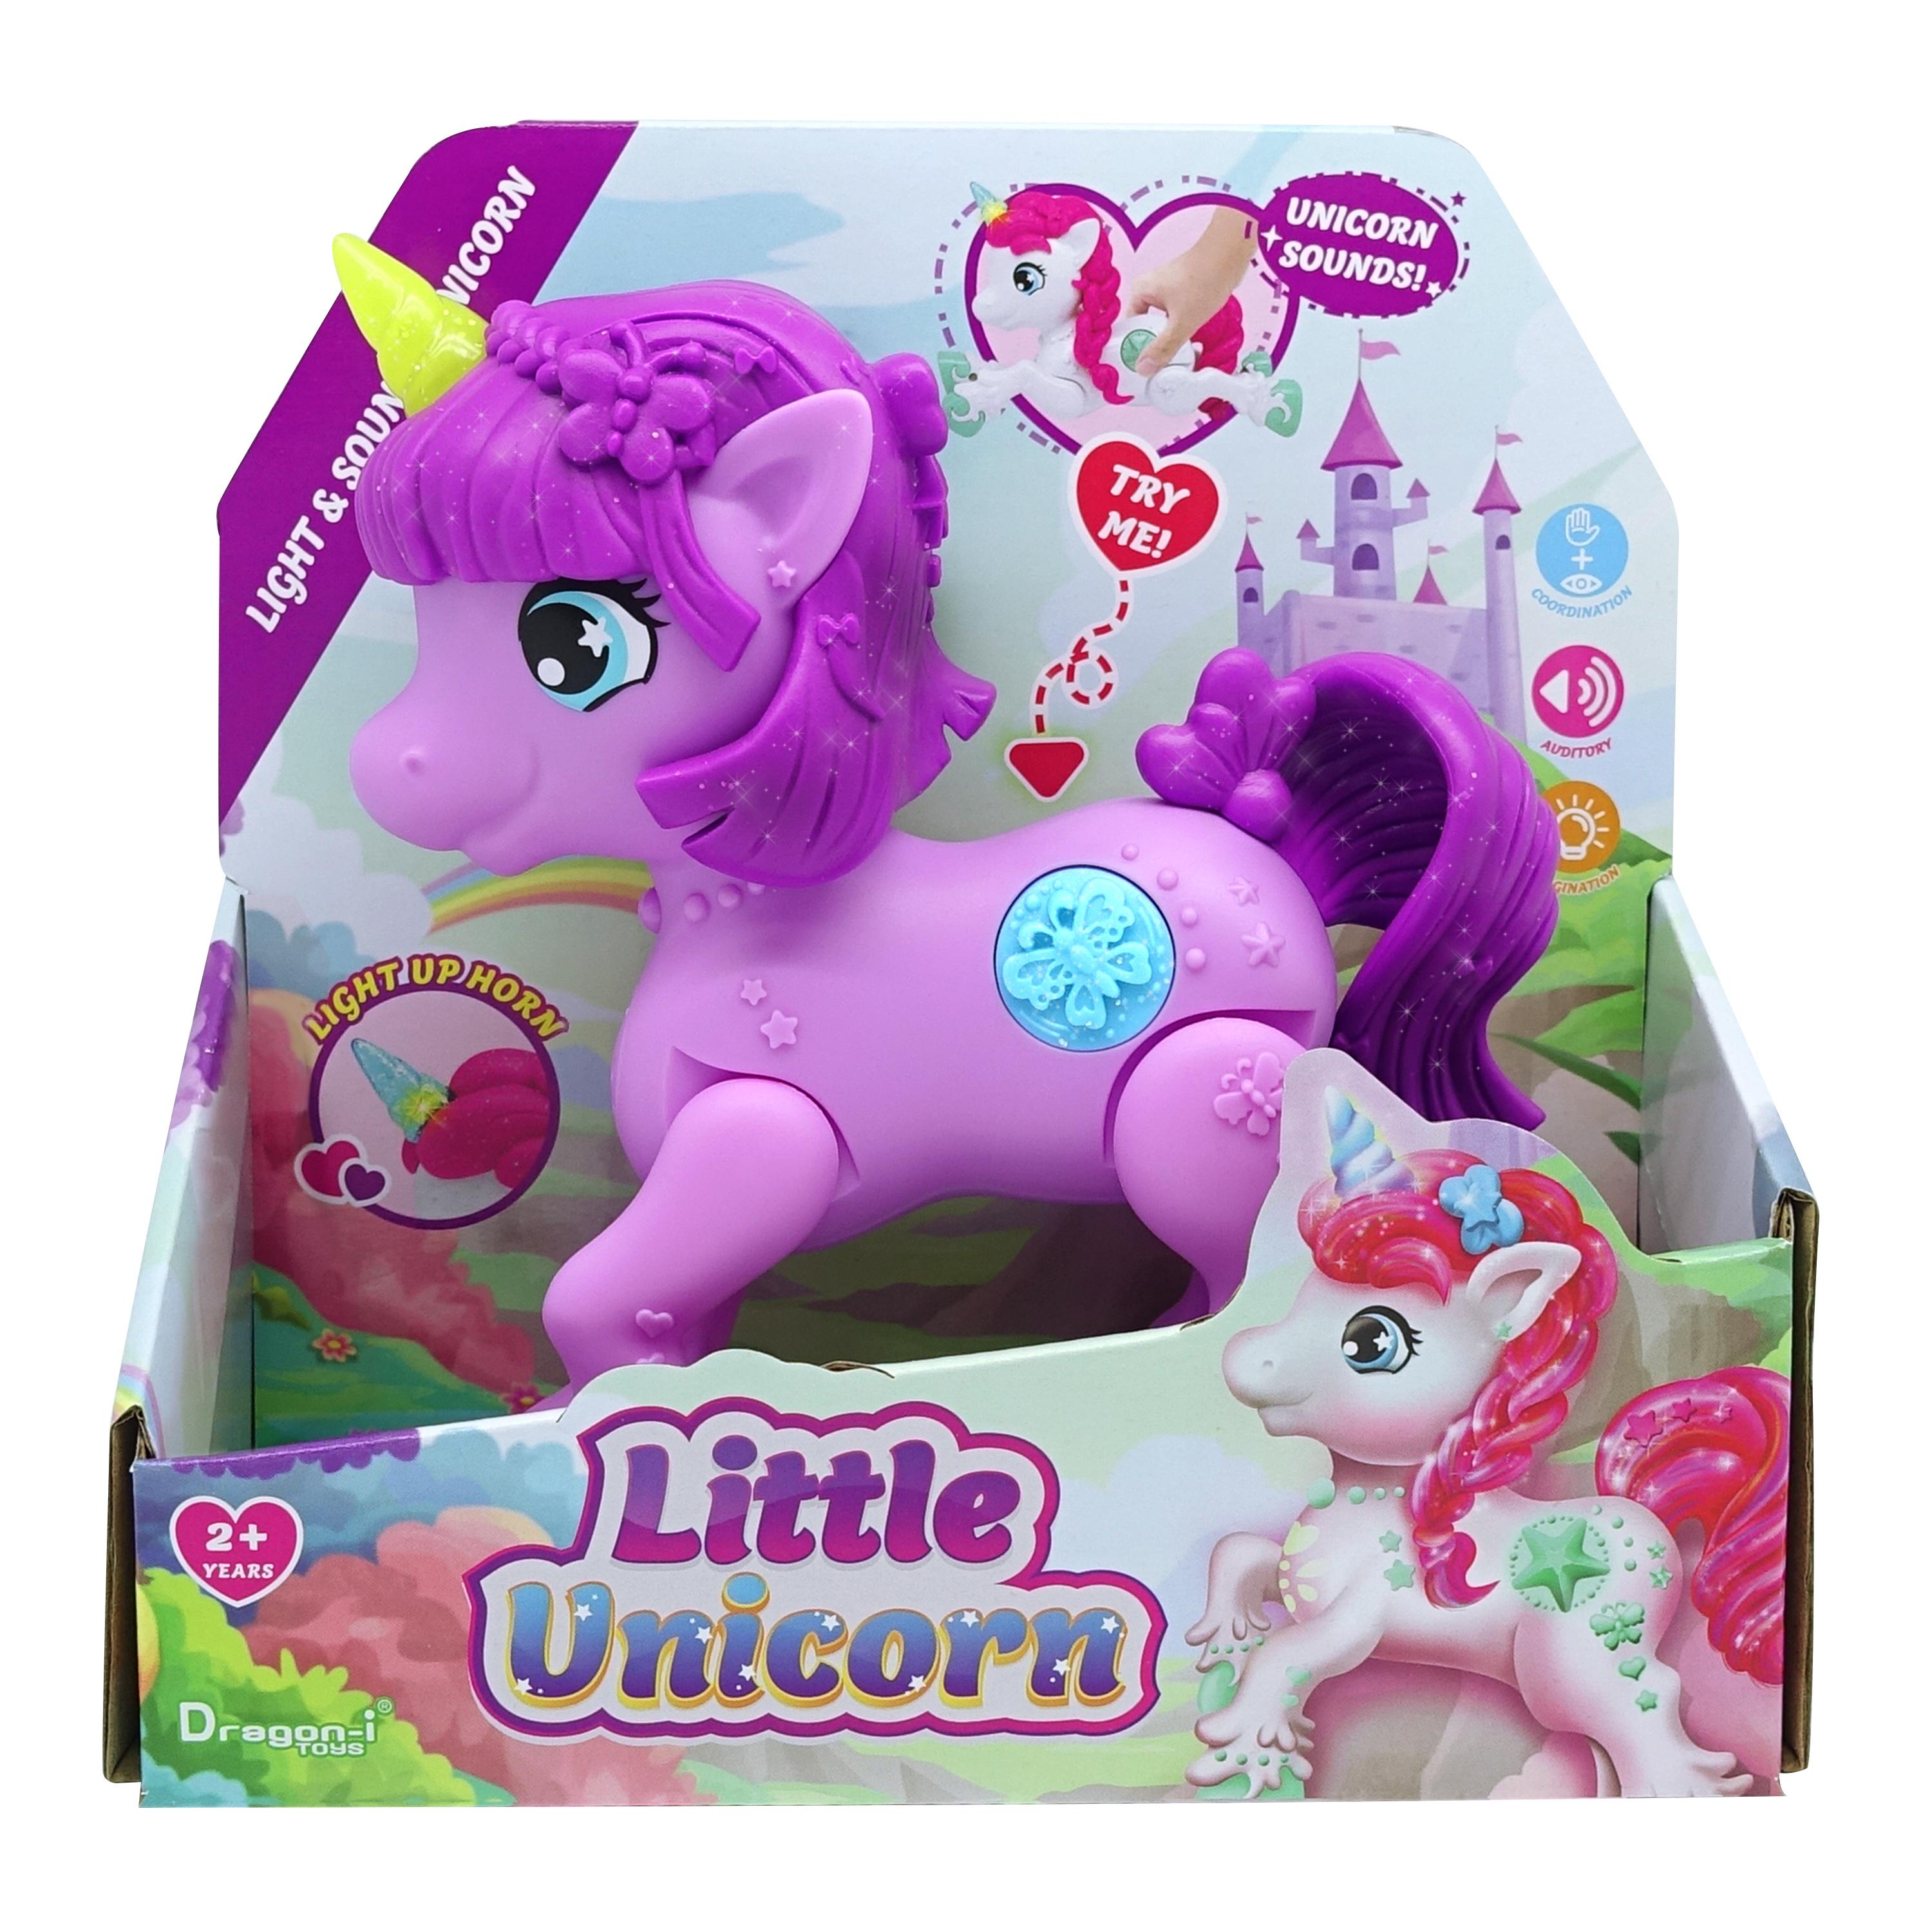 Little Unicorn in violet color - Light and Sounds Unicorn 3 color asst